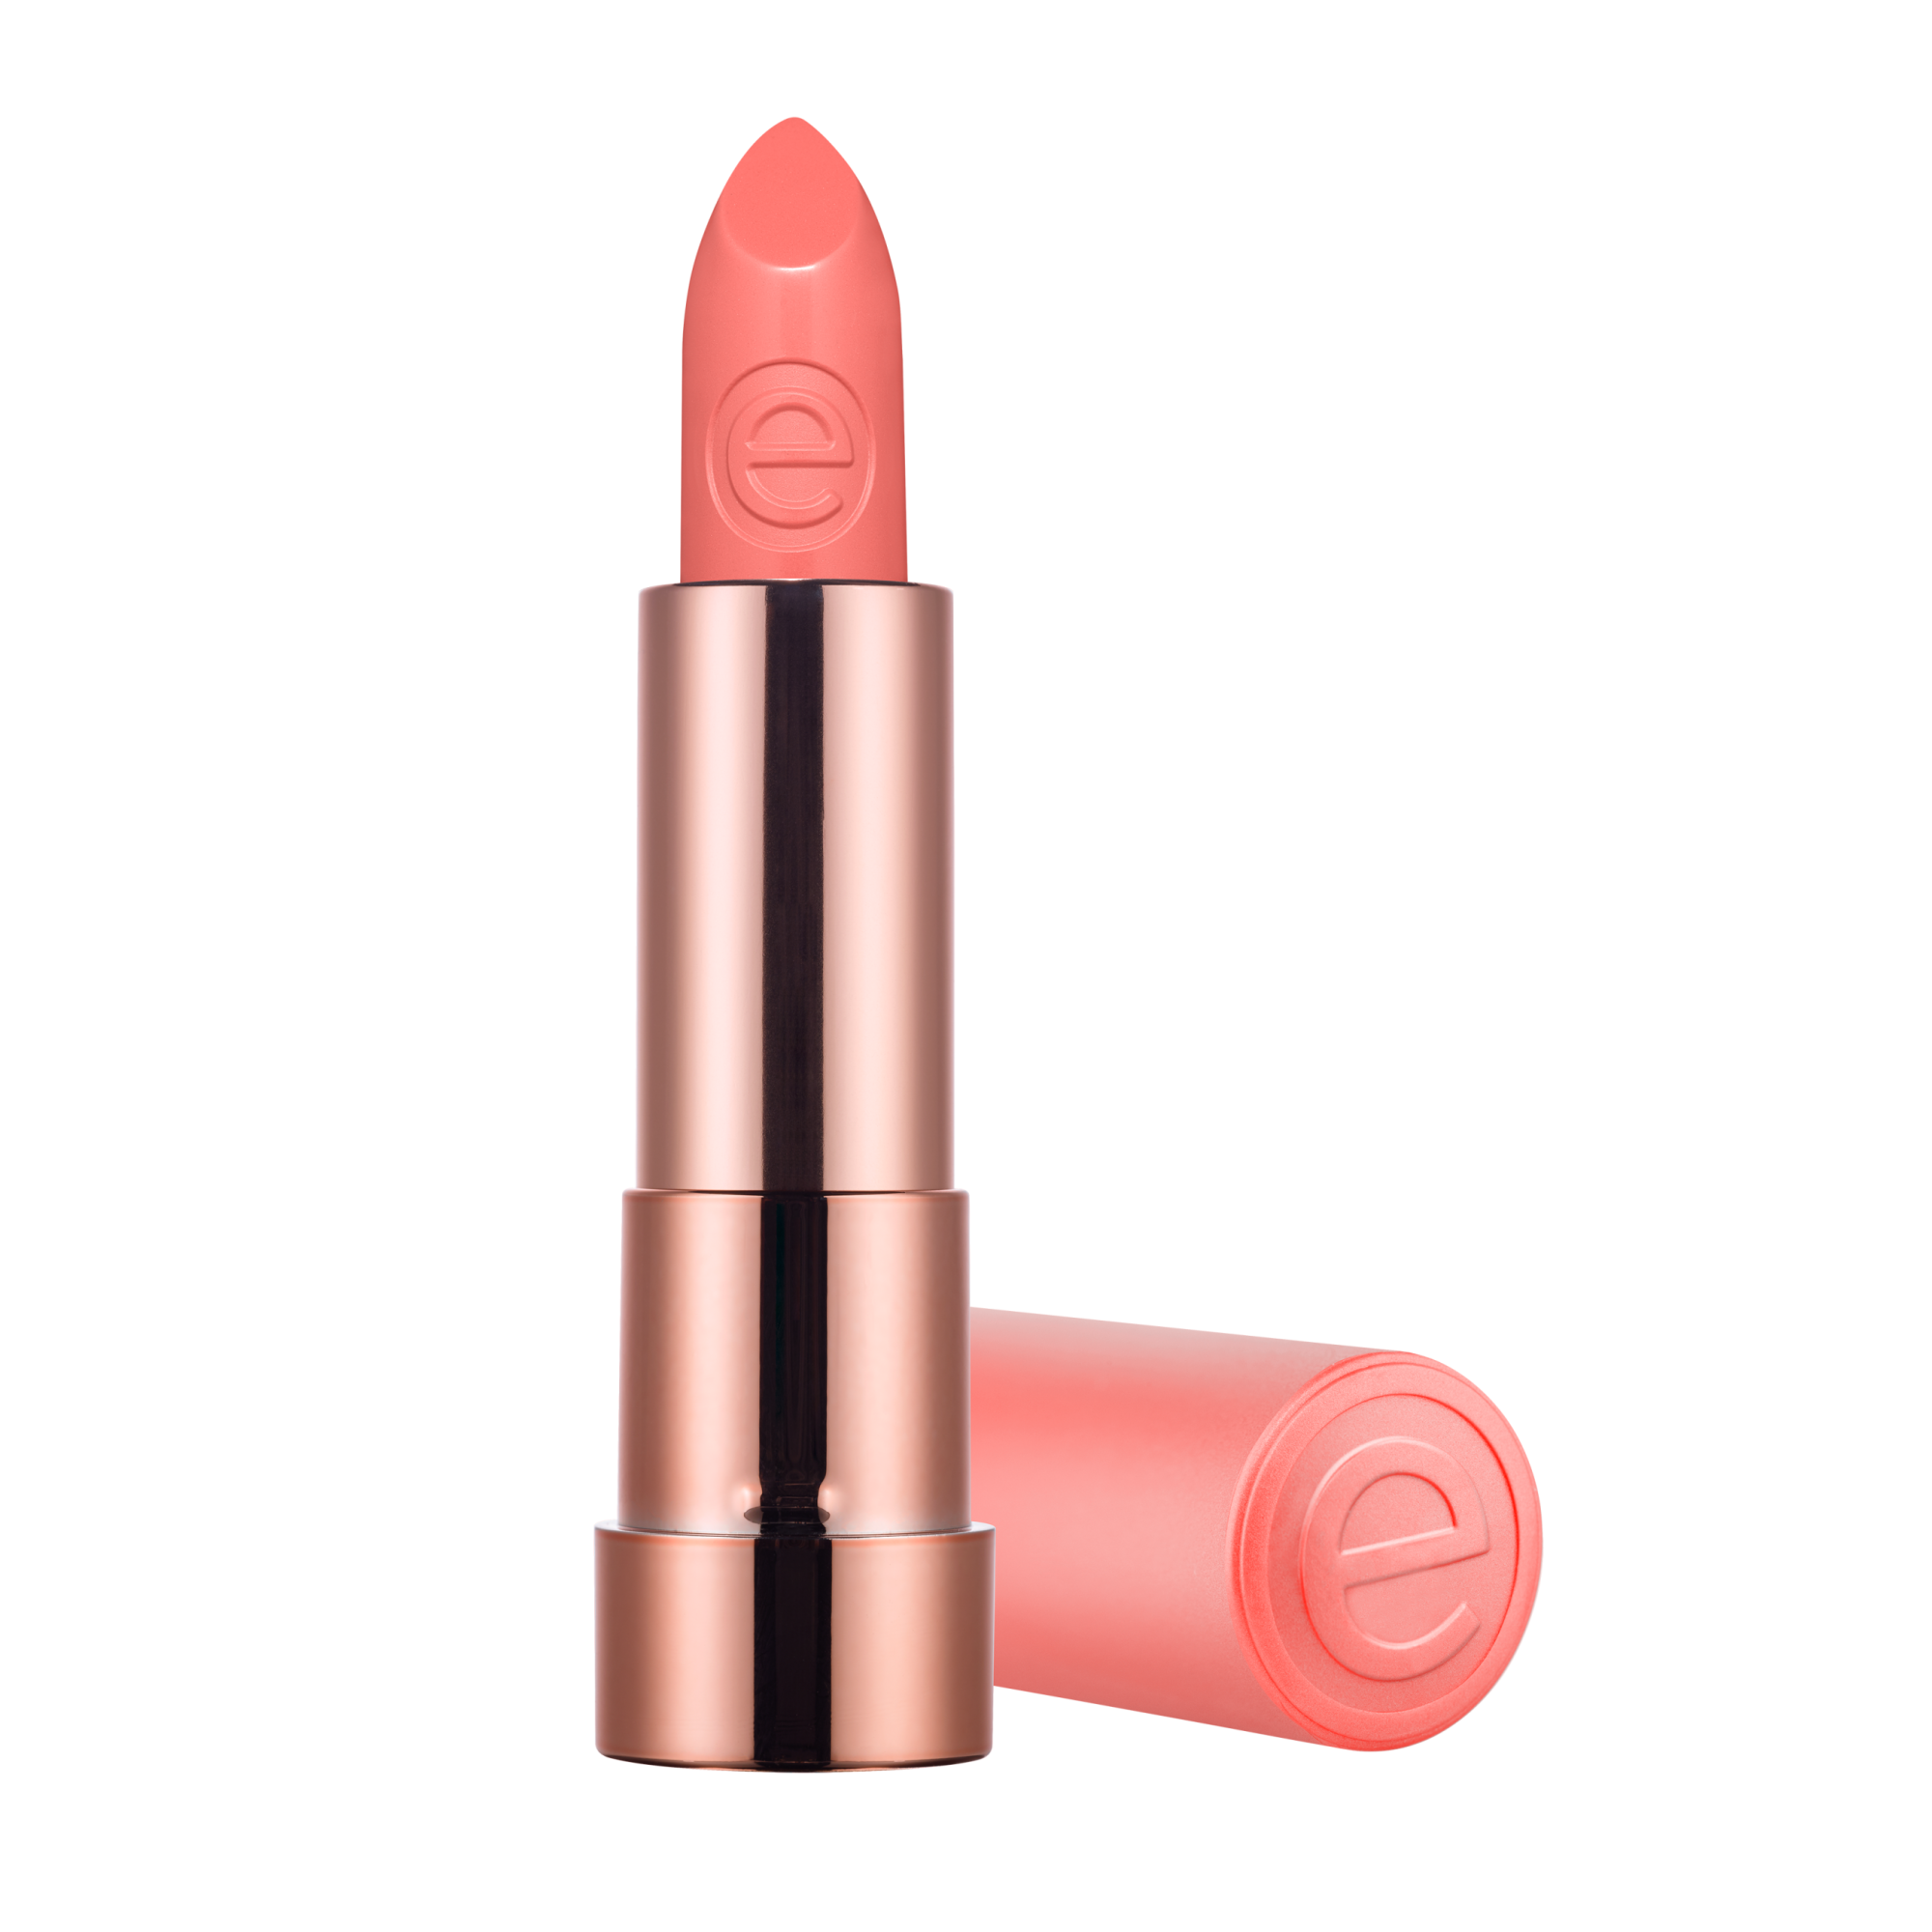 hydrating nude lipstick